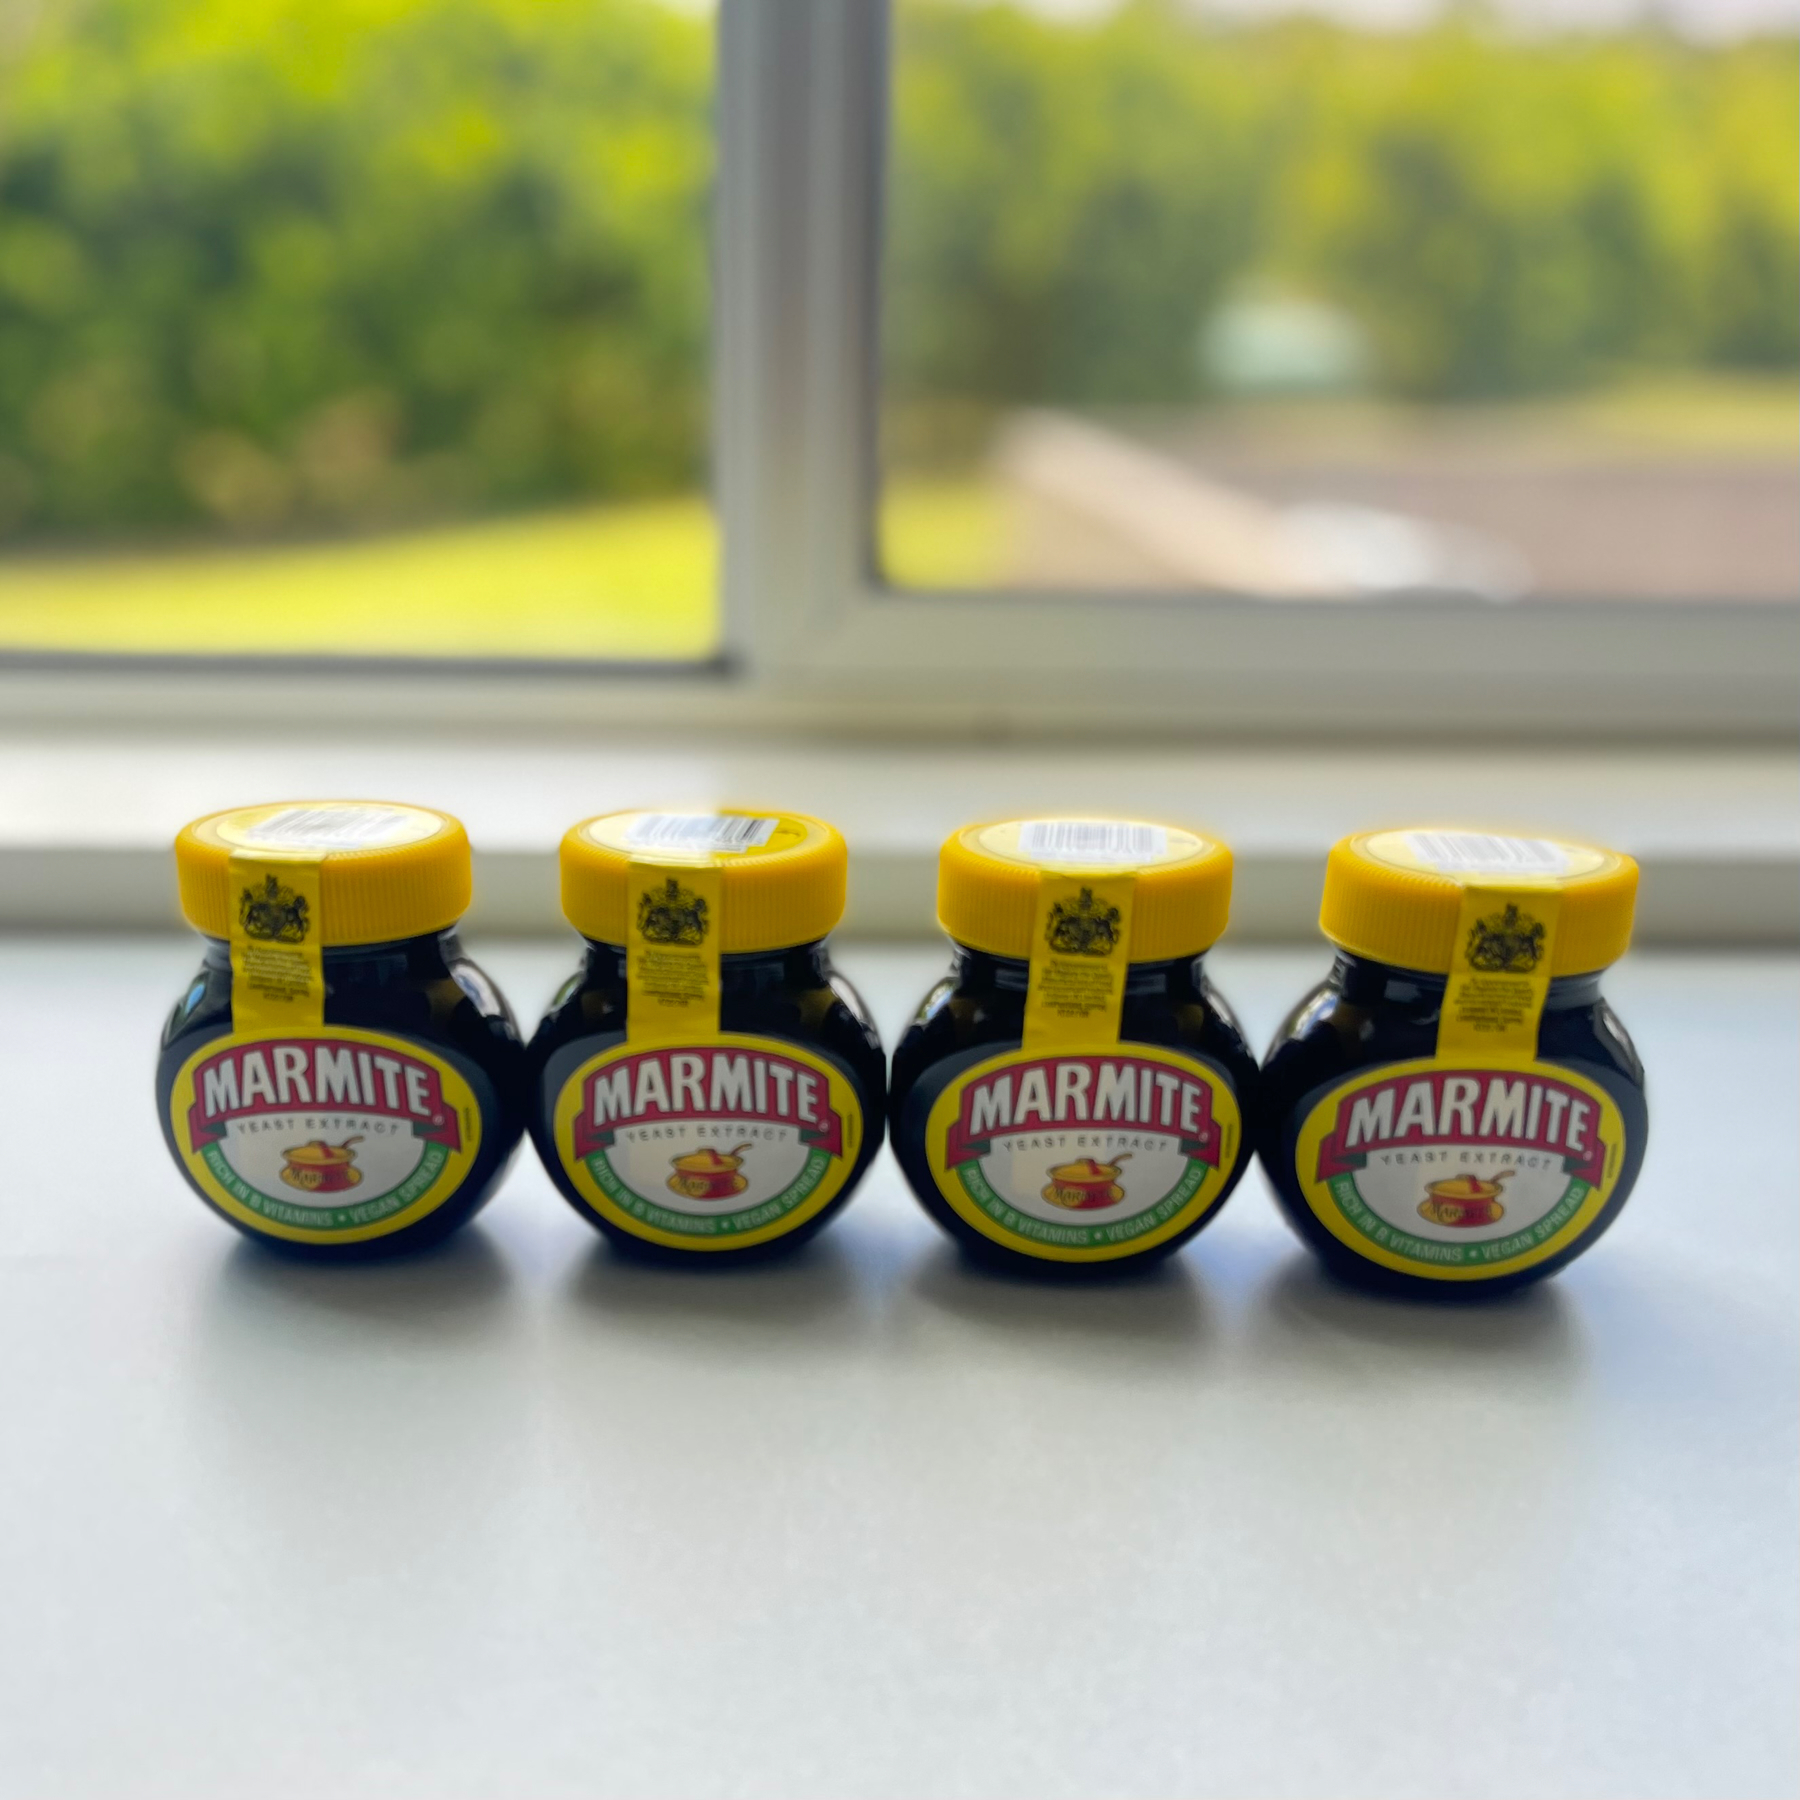 Four jars of Marmite